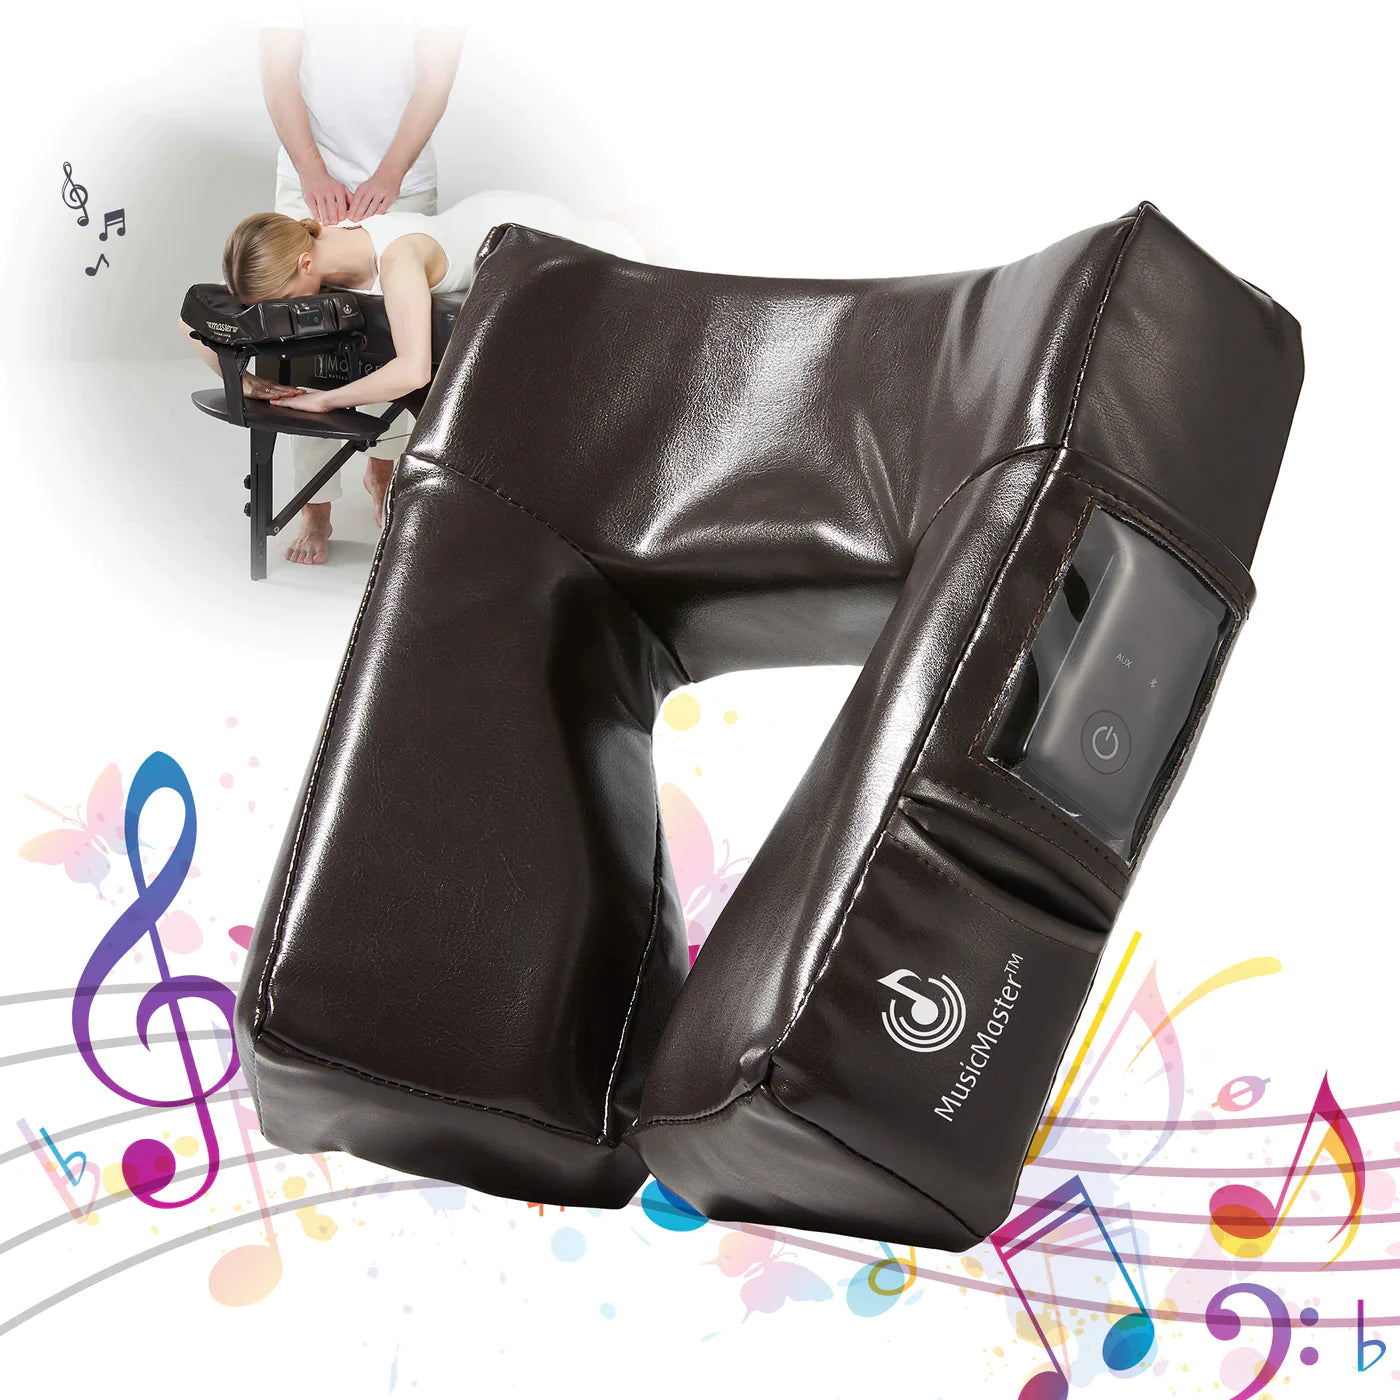 Bella2bello High Fidelity Sound Ergonomic Dream Face Cushion- Bluetooth Music Massage Pillow